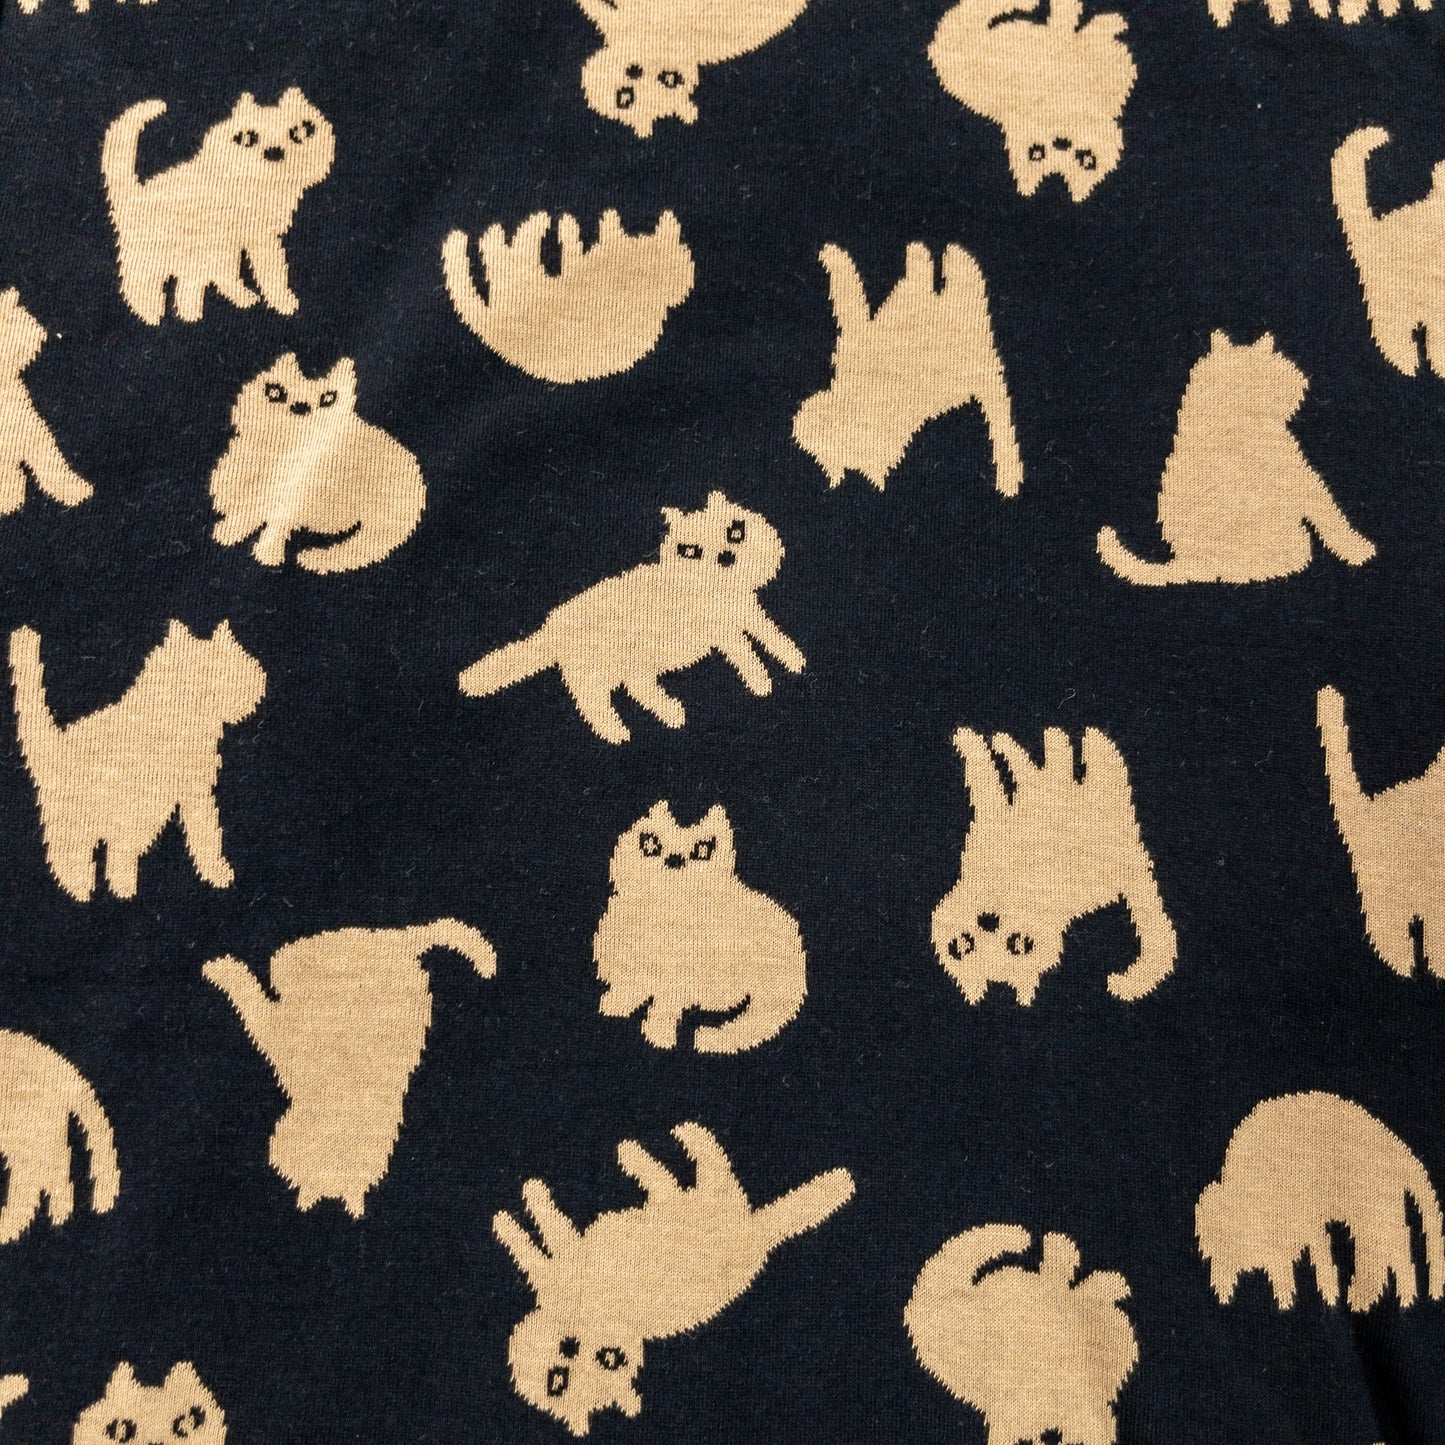 maffon | chubby cat black khahi 胖貓貓 黑+卡其色 | cotton jacquard knit 雙面純棉提花針織 - 160cm